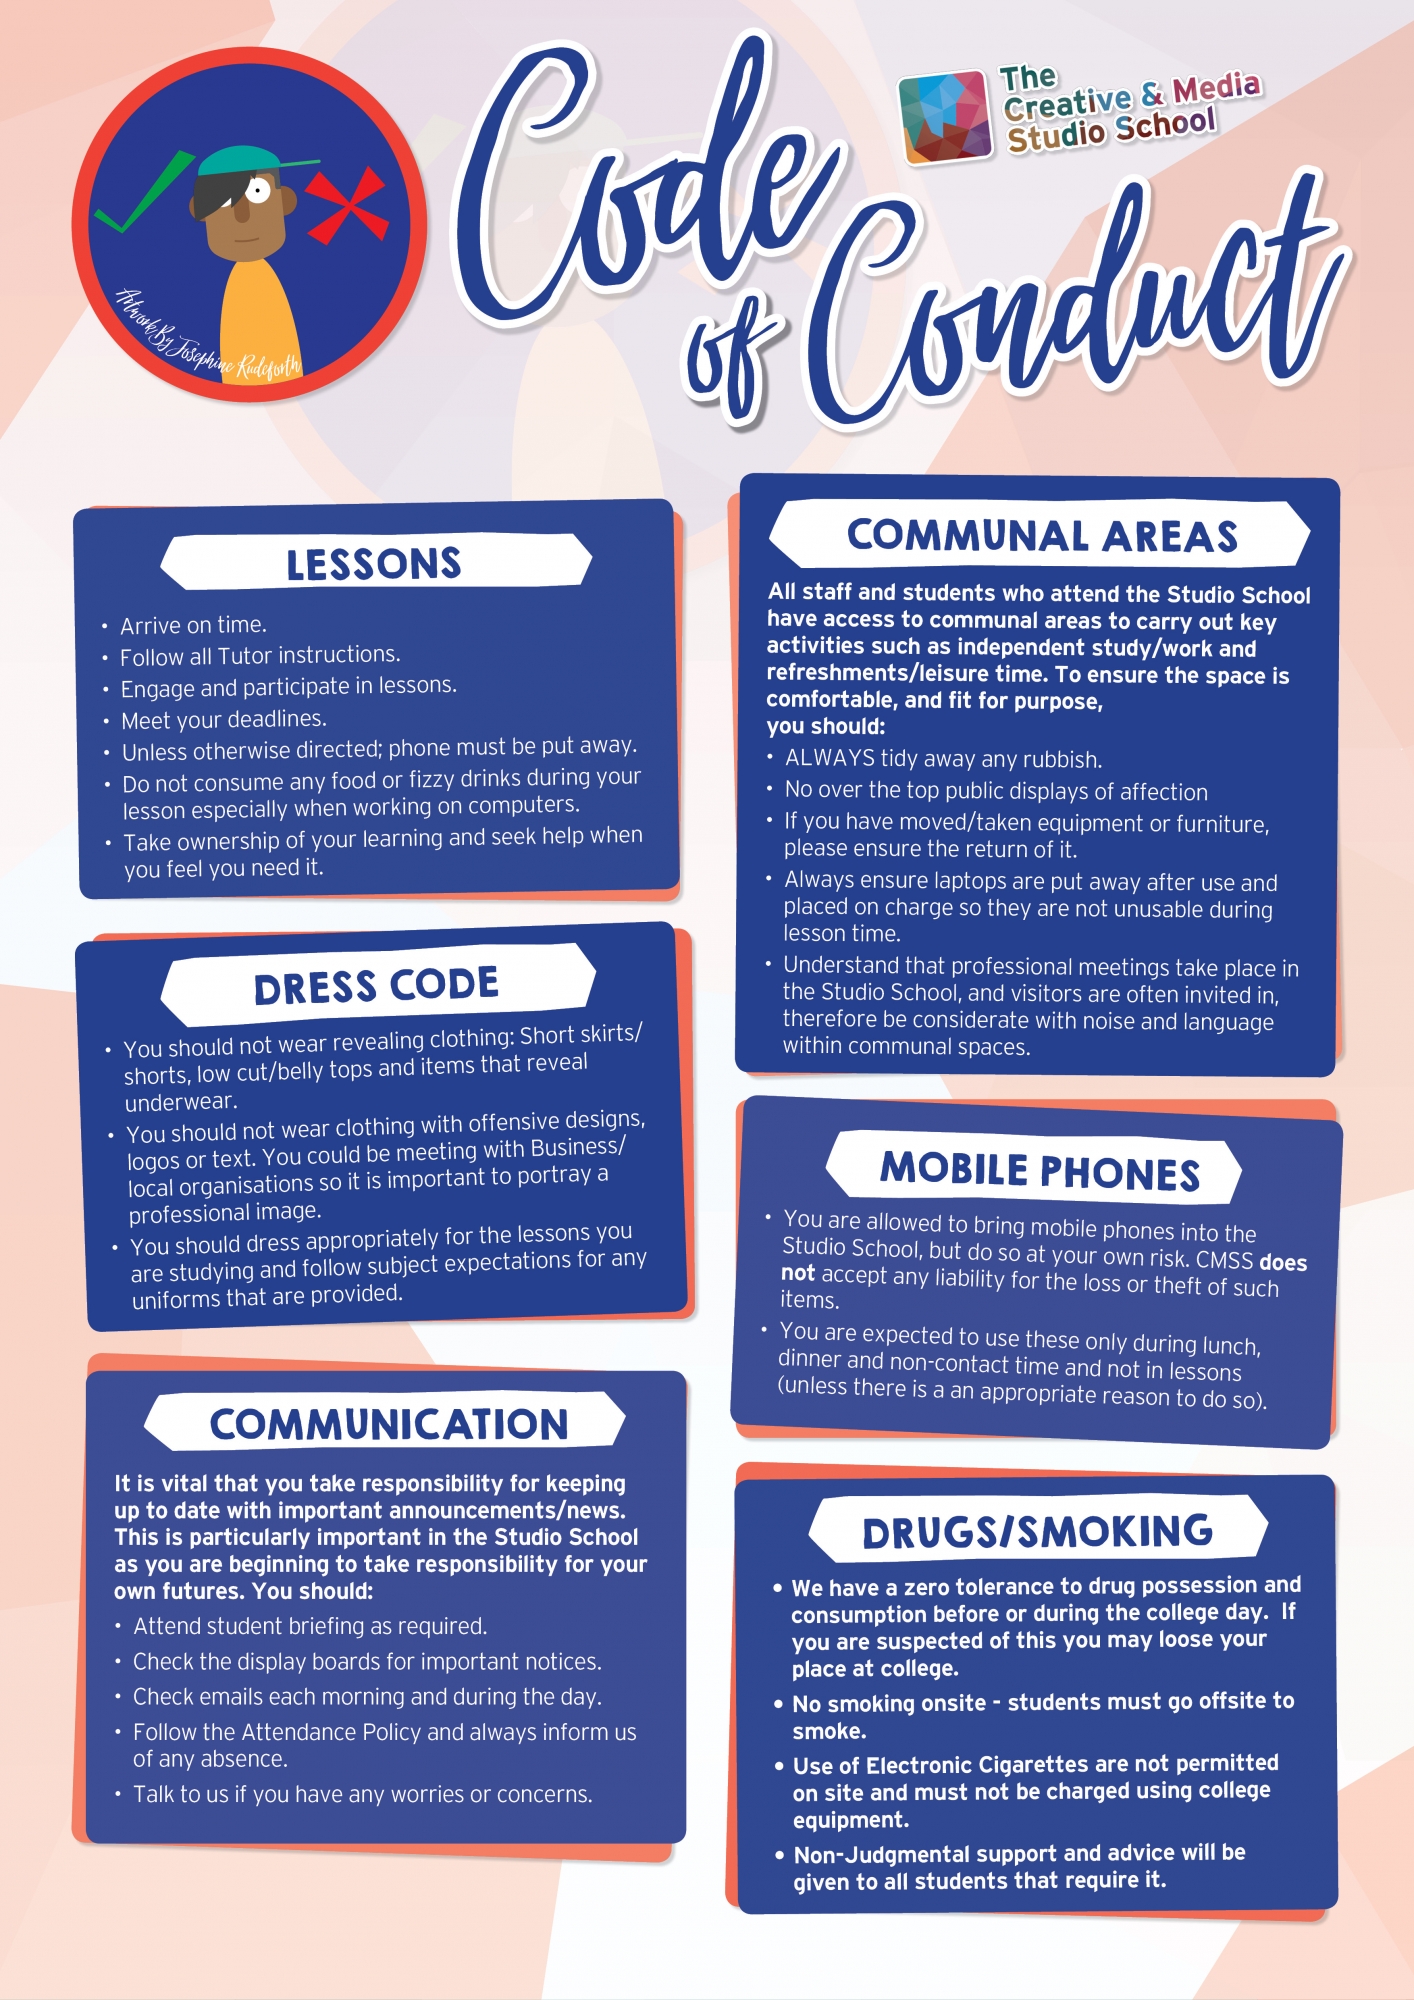 Creative and Media Studio School - Code of Conduct